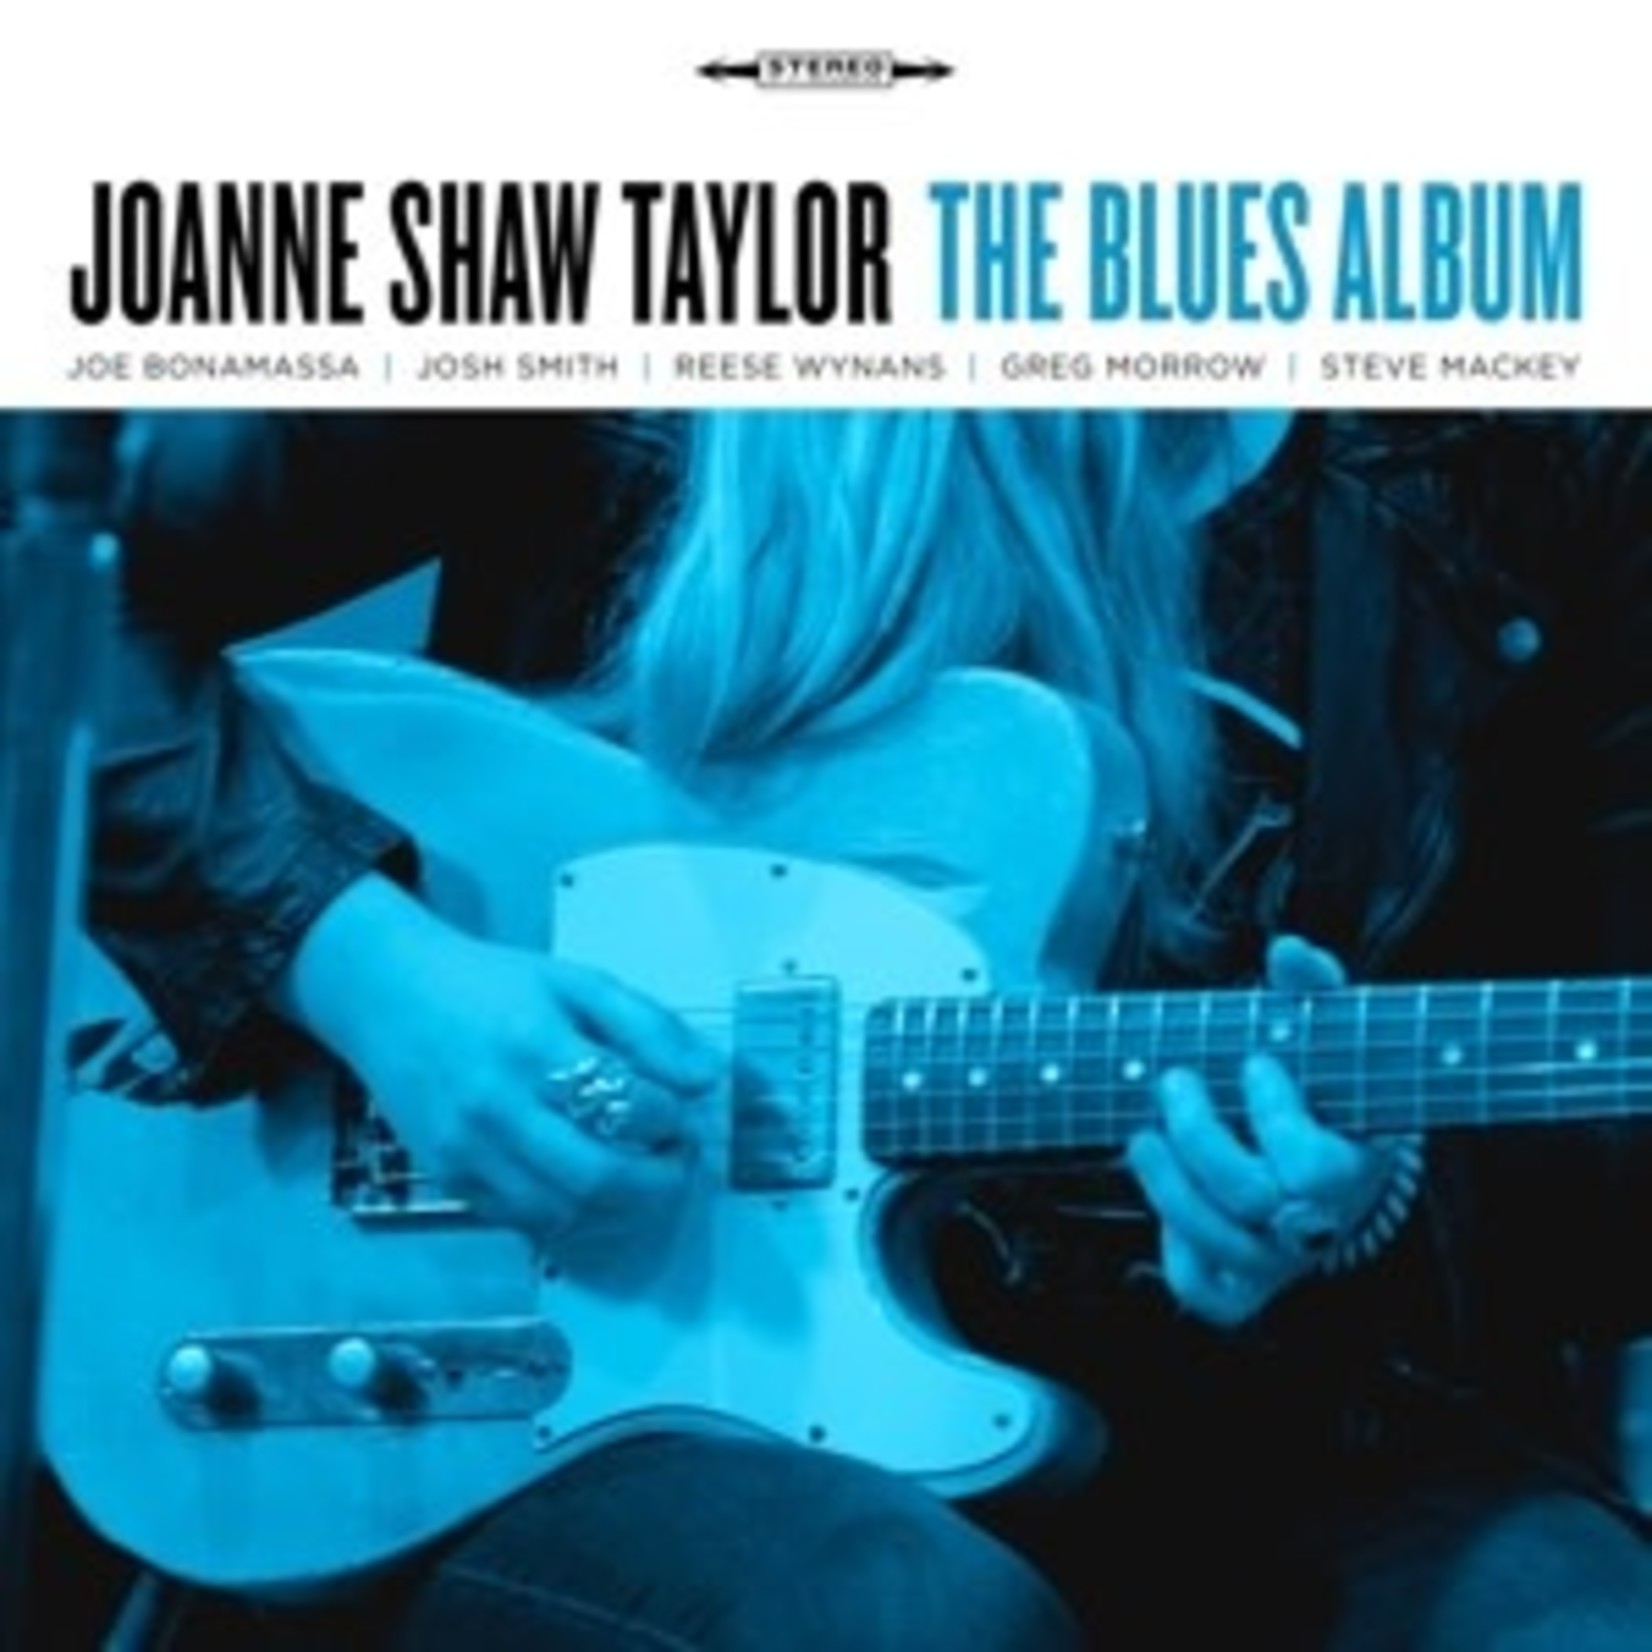 JOANNE SHAW TAYLOR - BLUES ALBUM (VINYL)